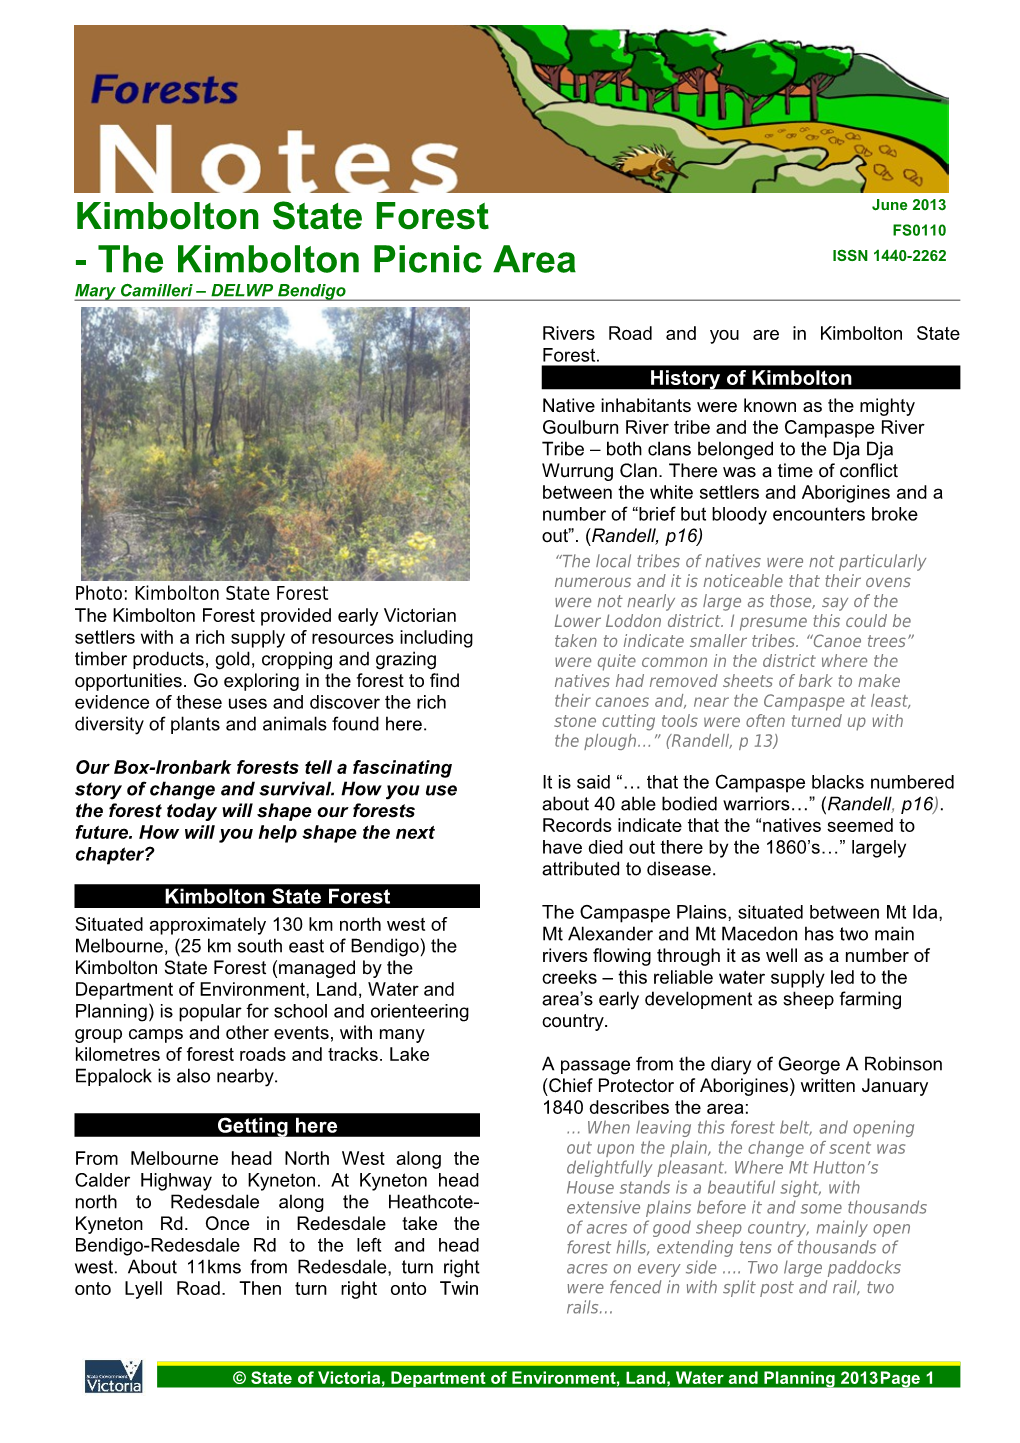 The Kimbolton Picnic Area Kimbolton State Forest